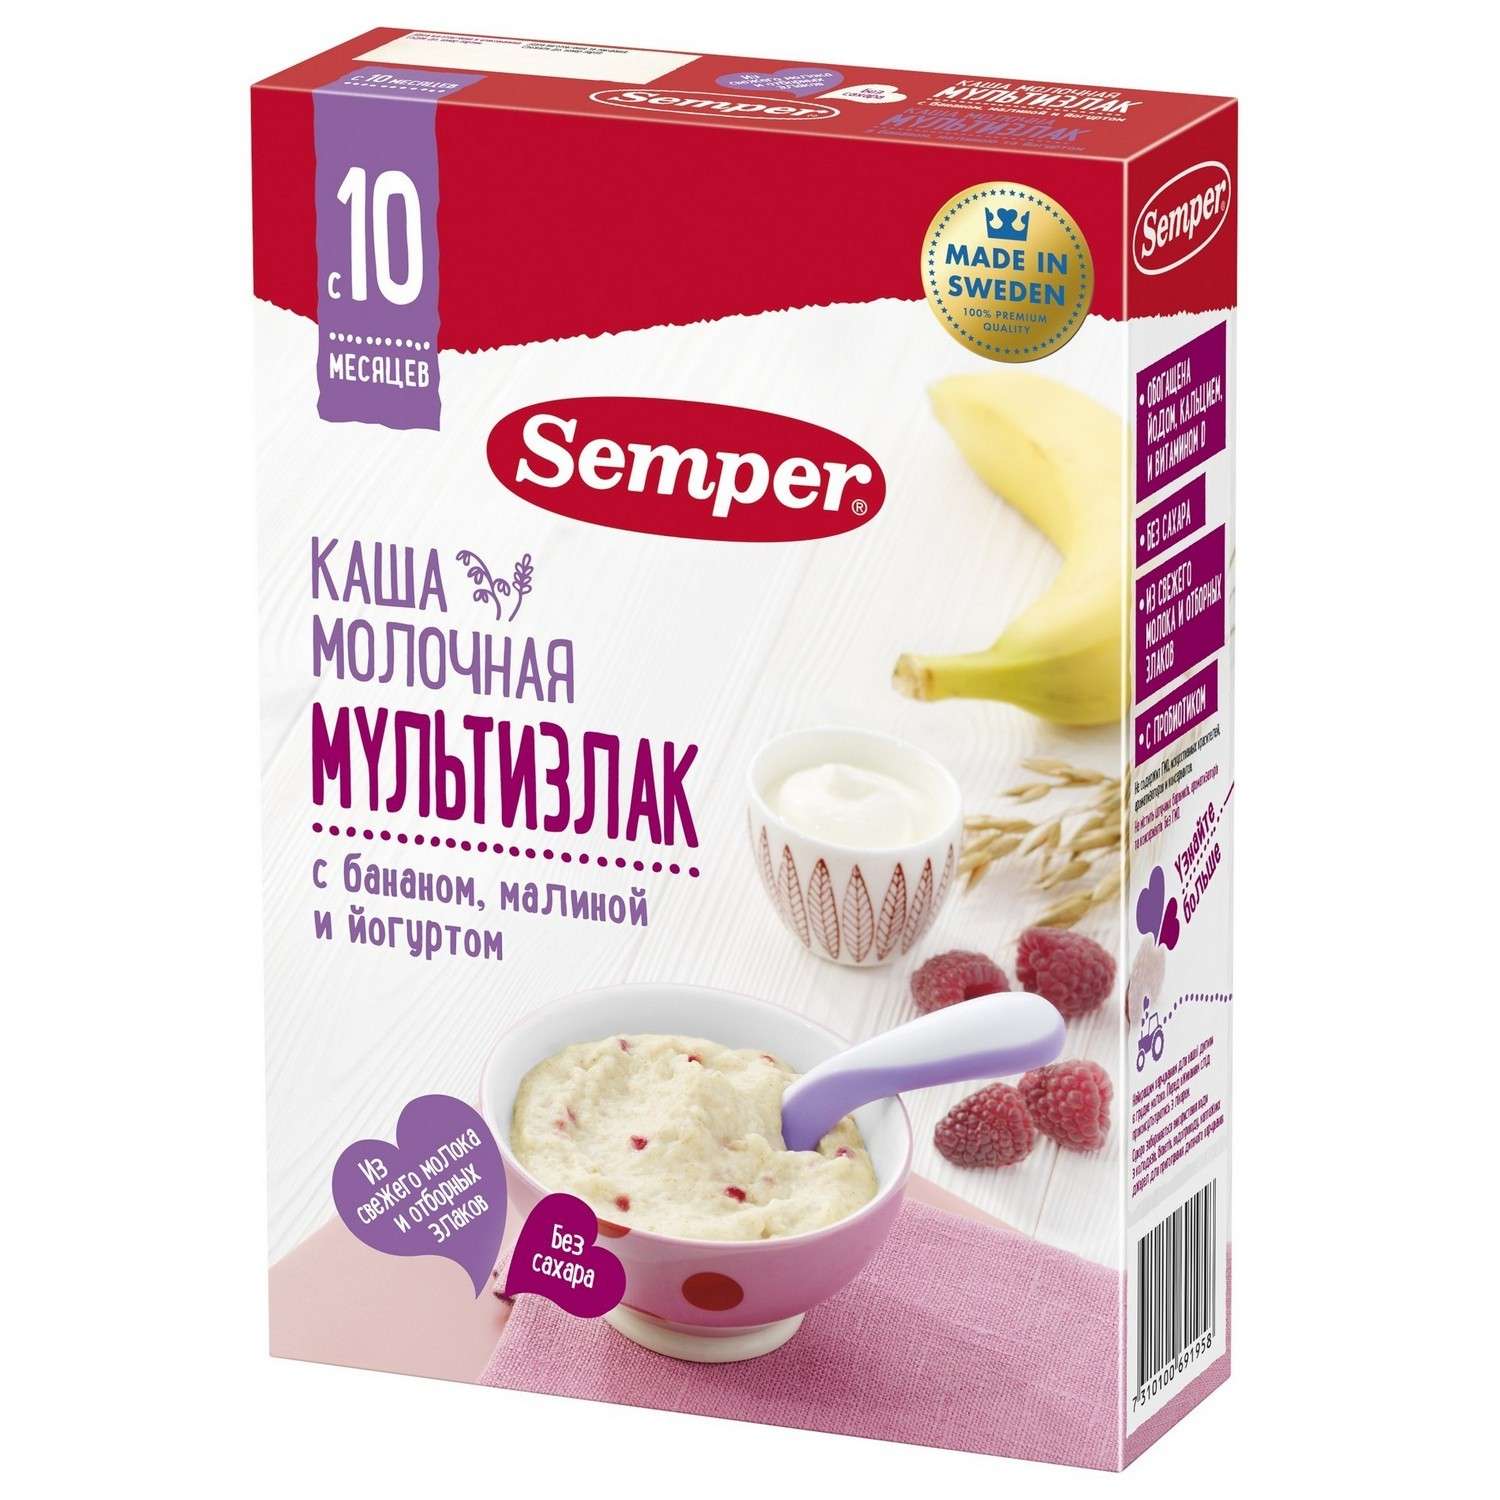 Каша молочная Semper мультизлак банан-малина-йогурт 200г с 10месяцев - фото 1